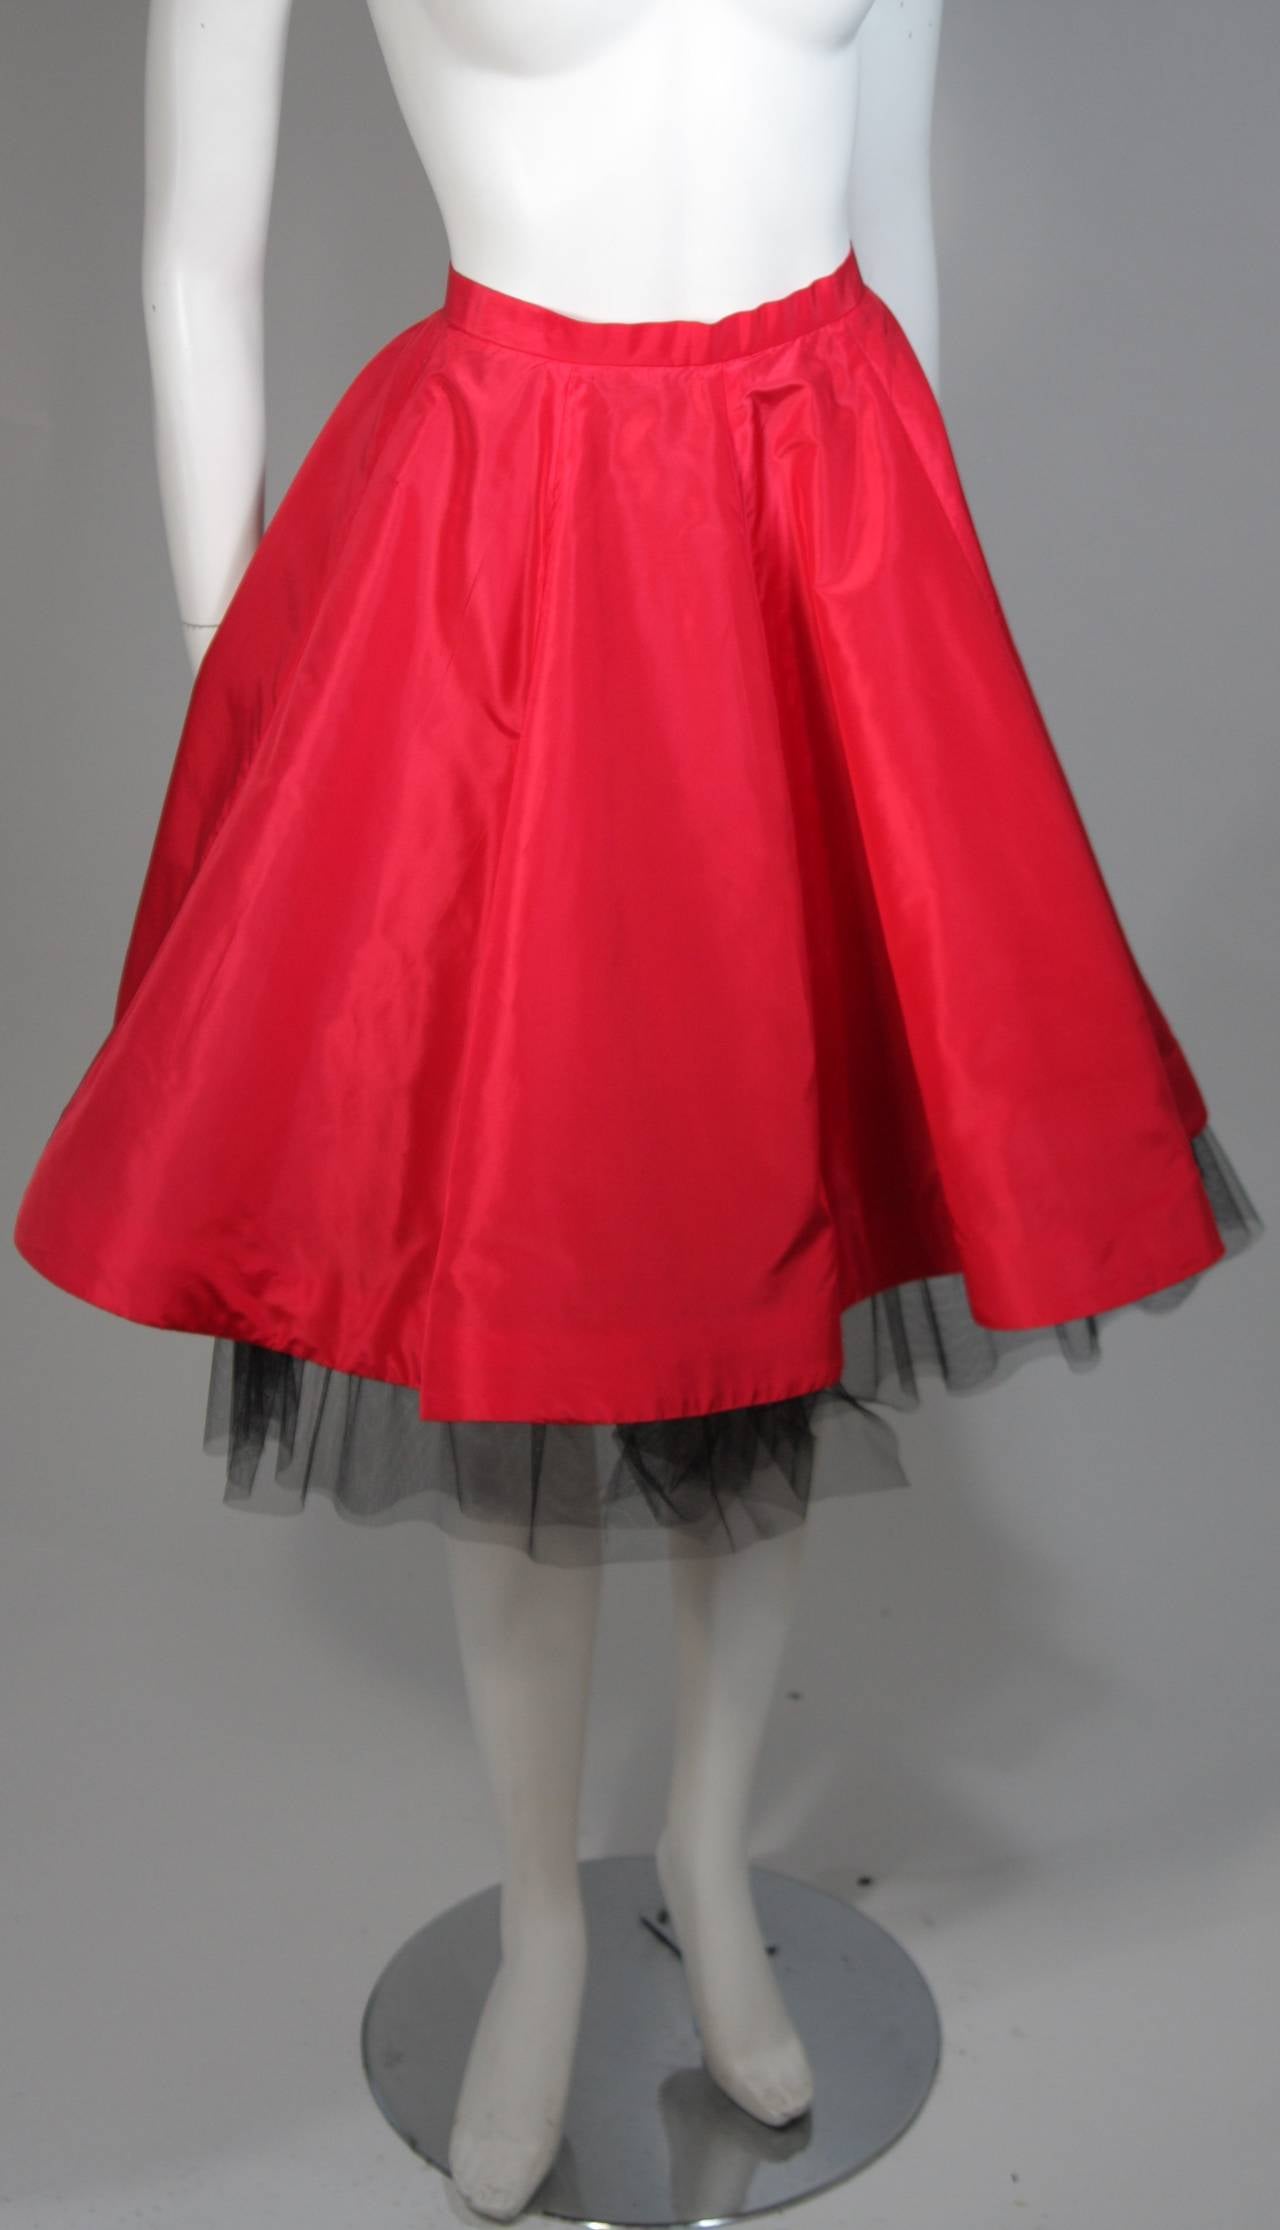 Women's Oscar De La Renta Red Skirt with Crinoline Size 4